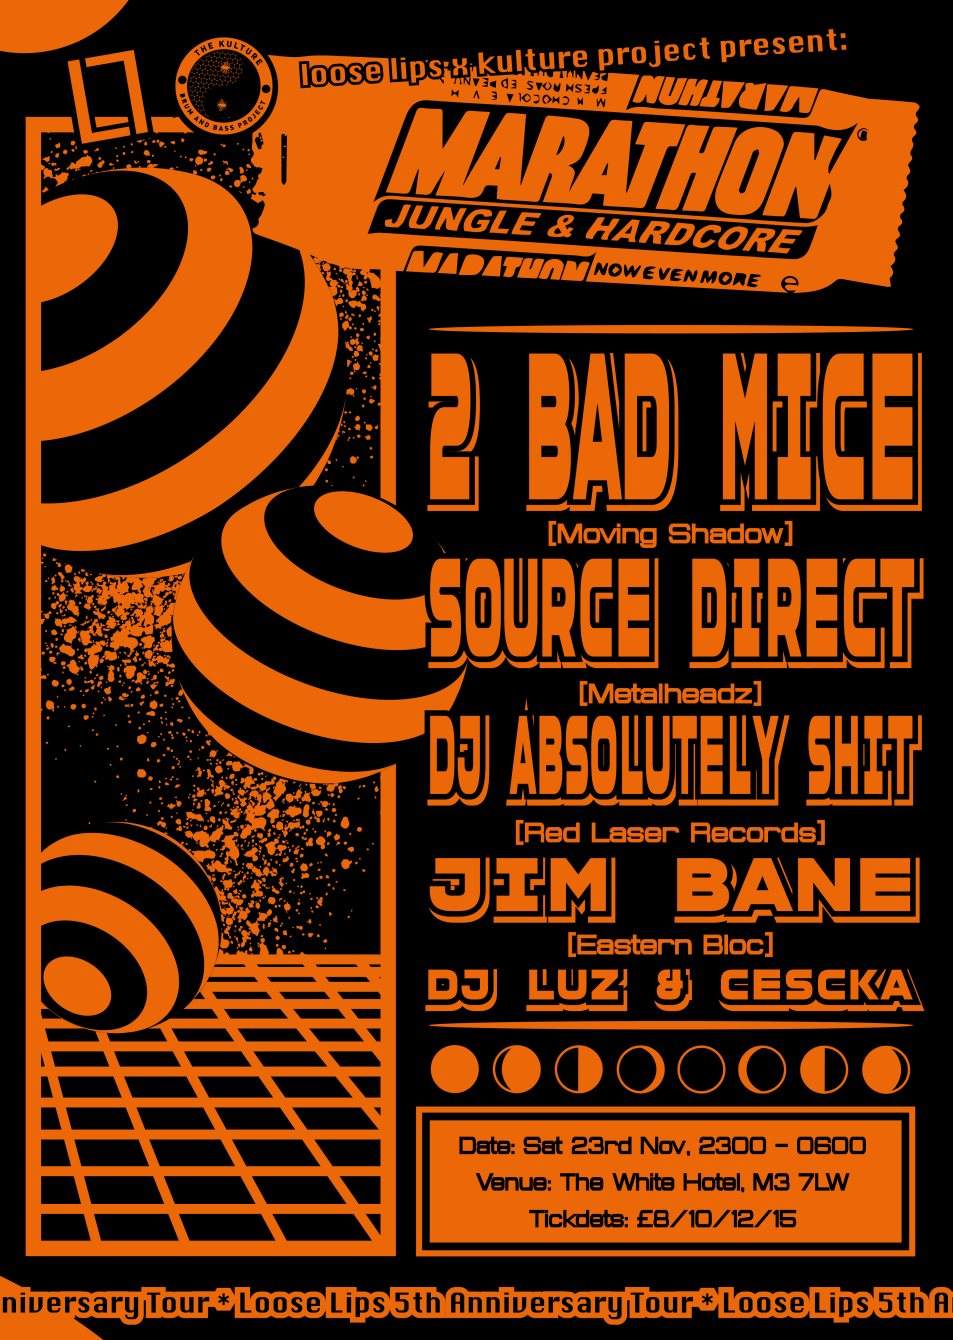 LL x KP - 2 Bad Mice / Source Direct / DJ Absolutely Shit / Jim Bane - Página trasera